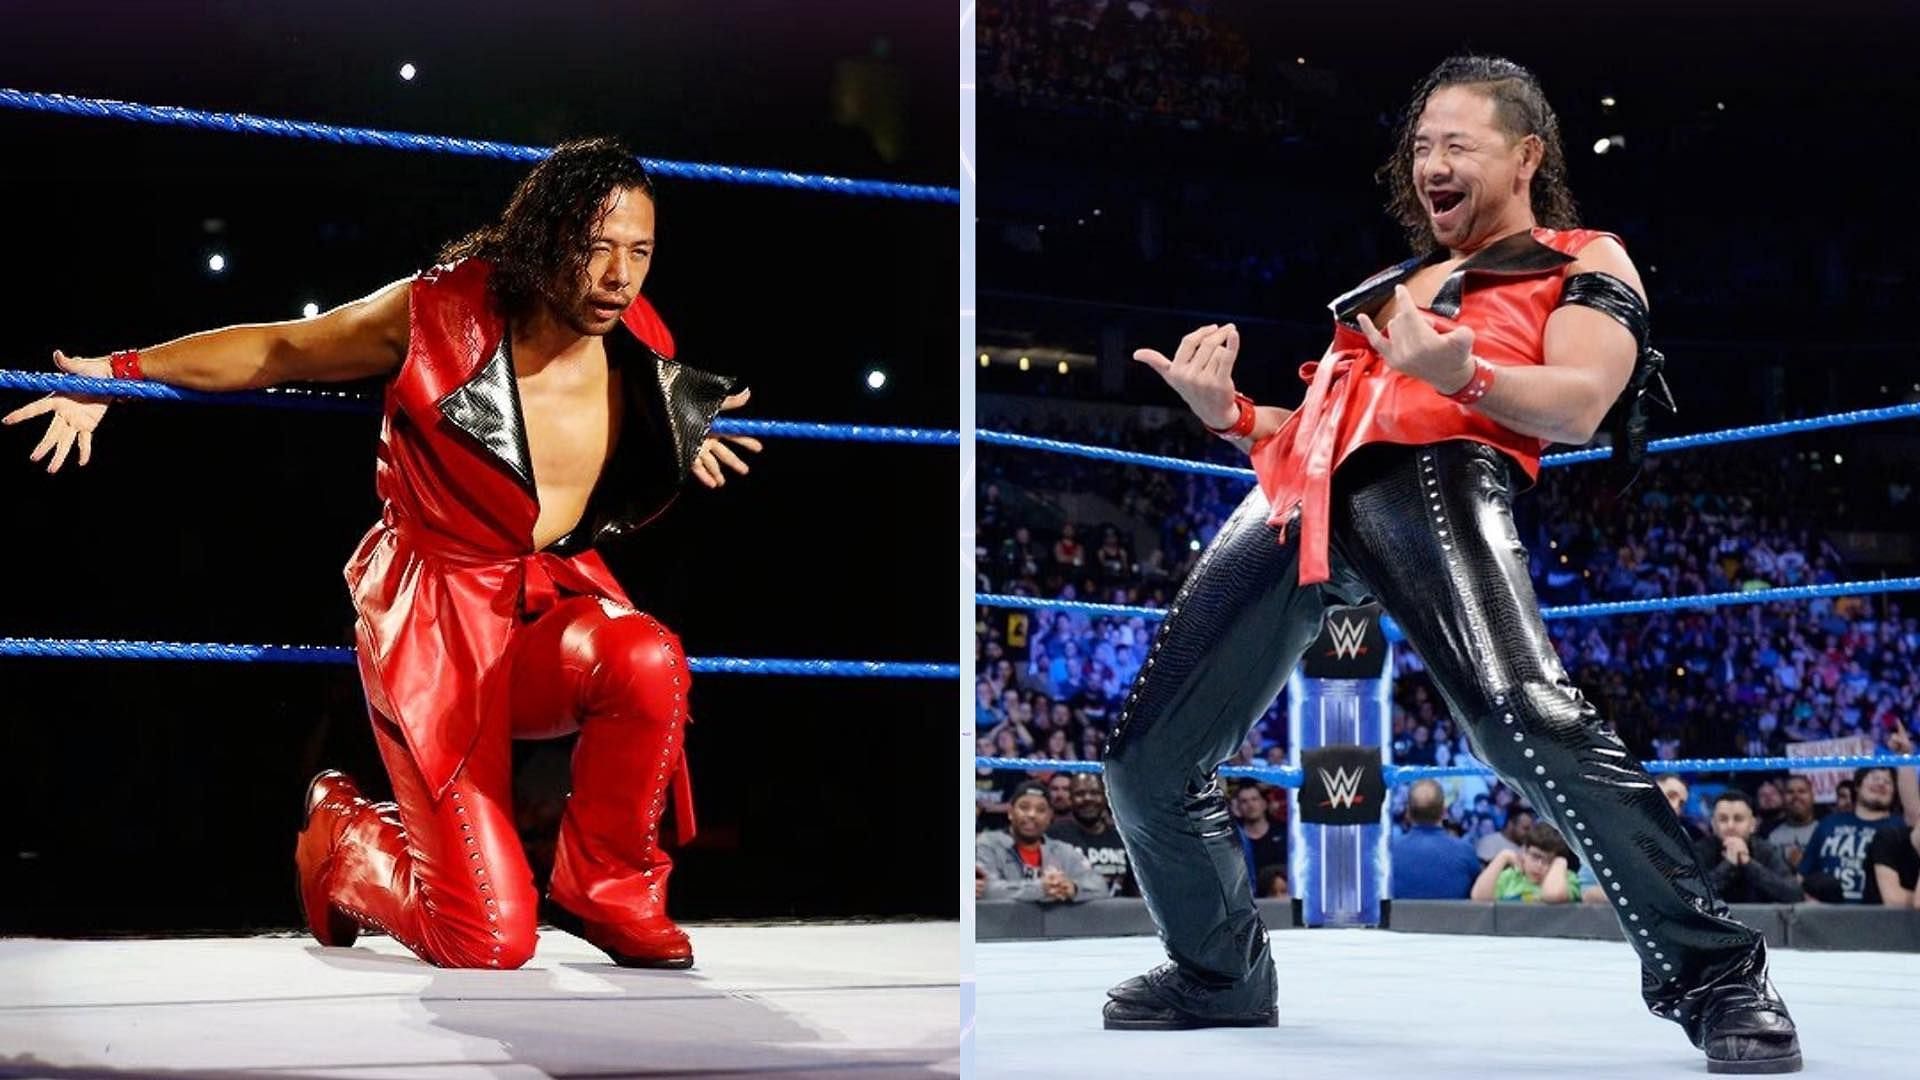 Shinsuke Nakamura is a former WWE Intercontinental Champion